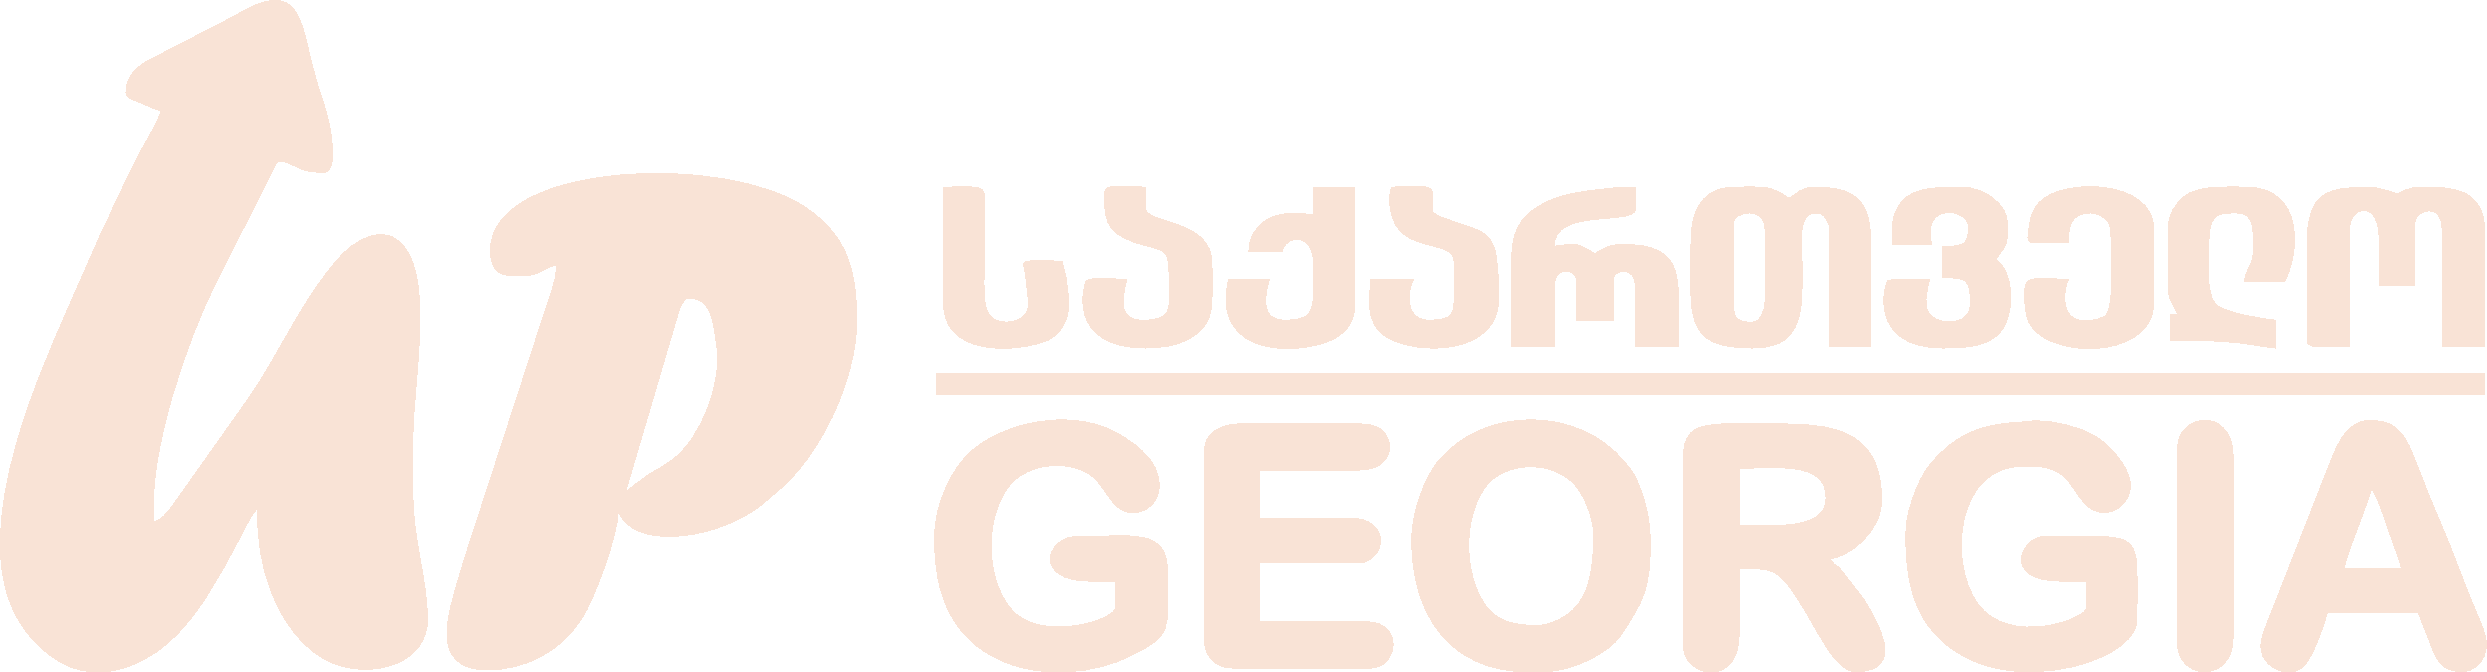 upgeorgia